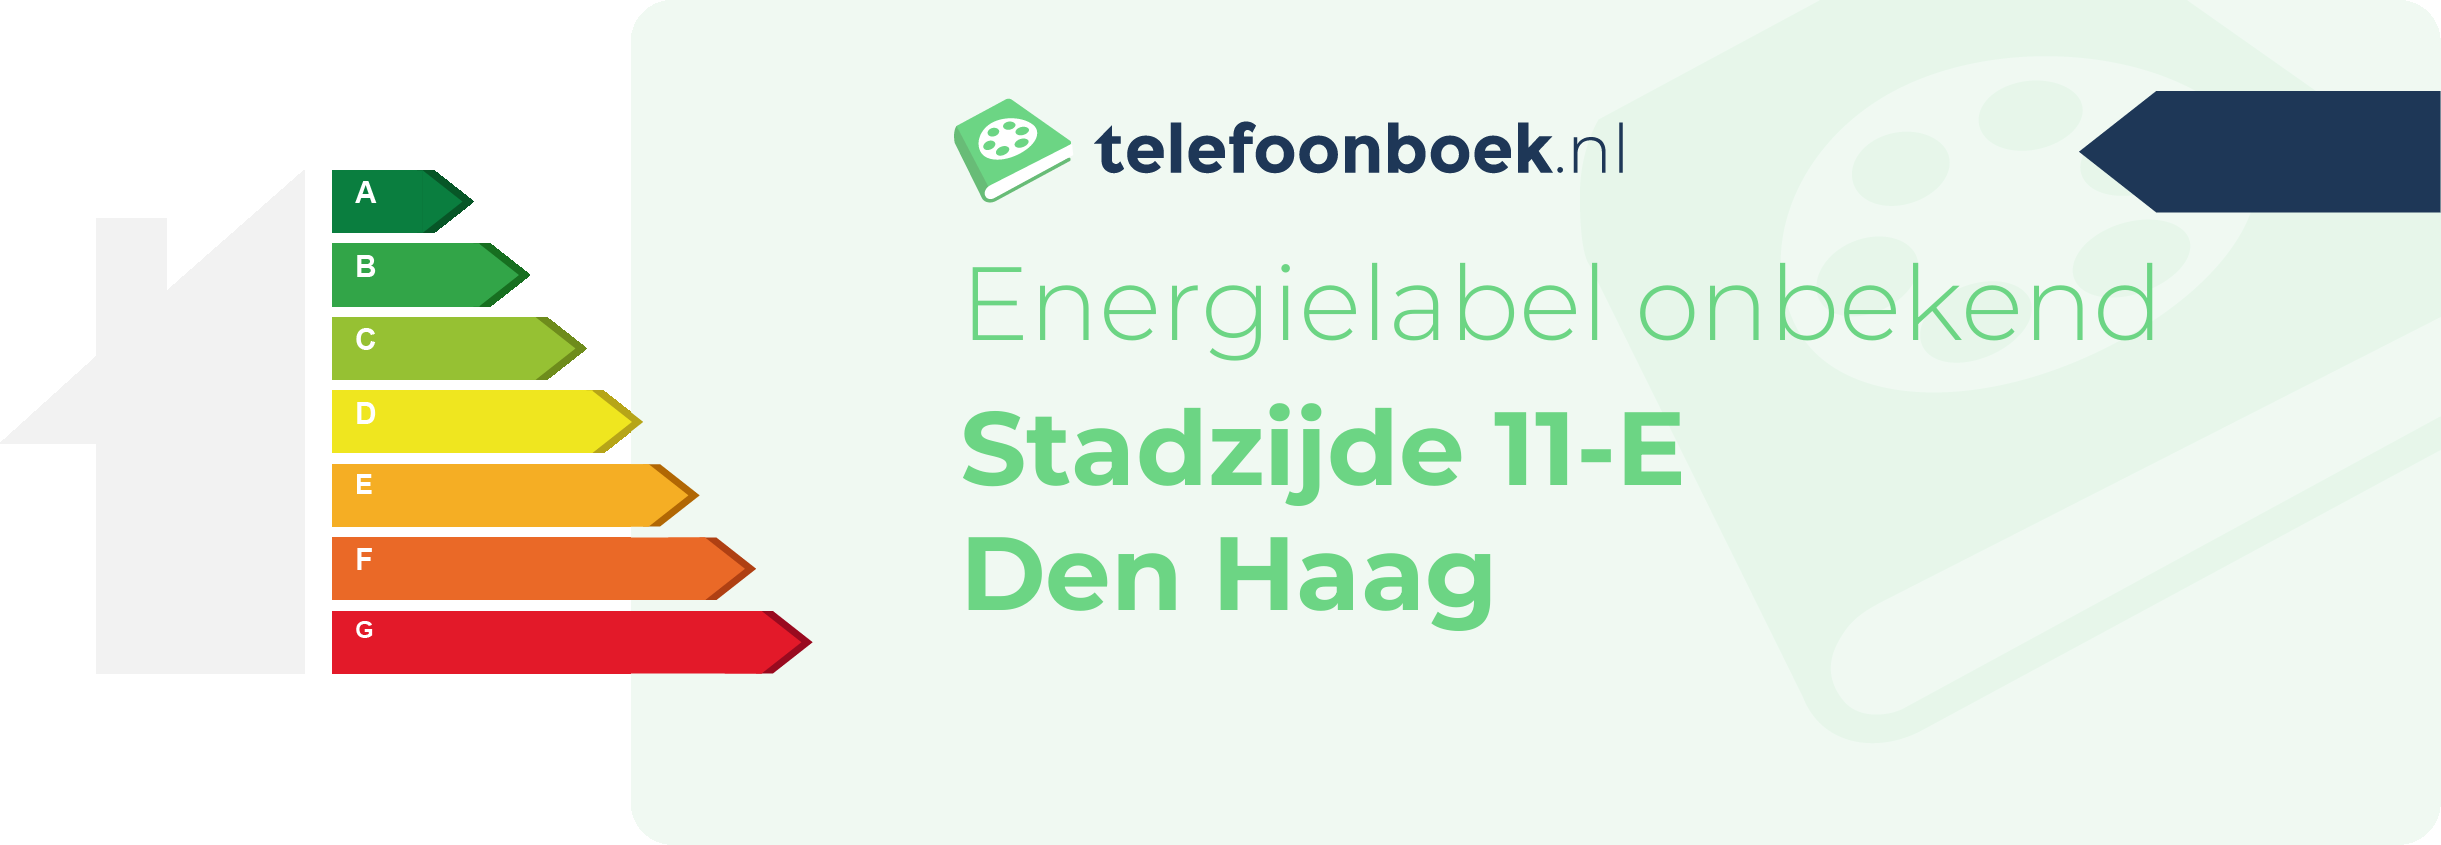 Energielabel Stadzijde 11-E Den Haag